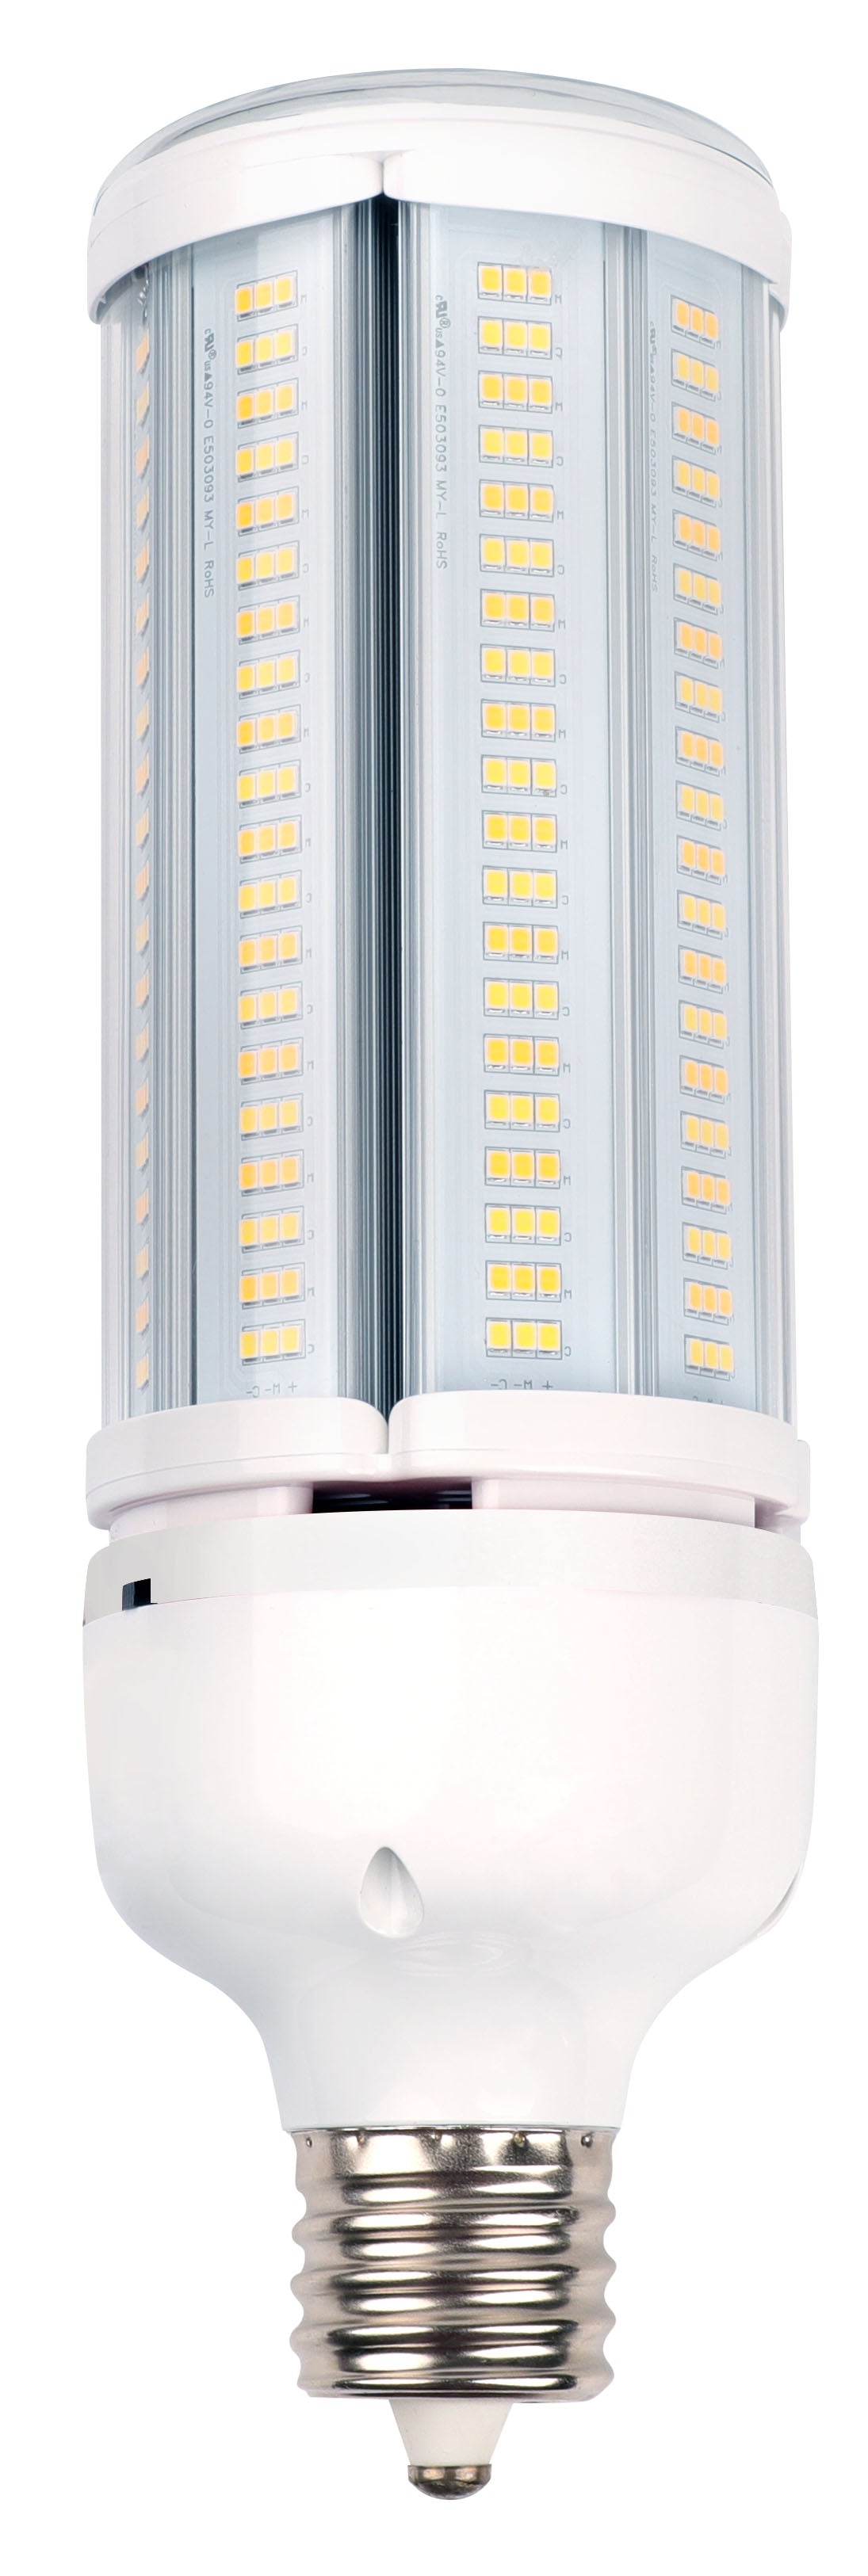 LED Corn Lamp, 80W, 12400 Lumens, 5000K CCT, EX39 Base; 120-277V